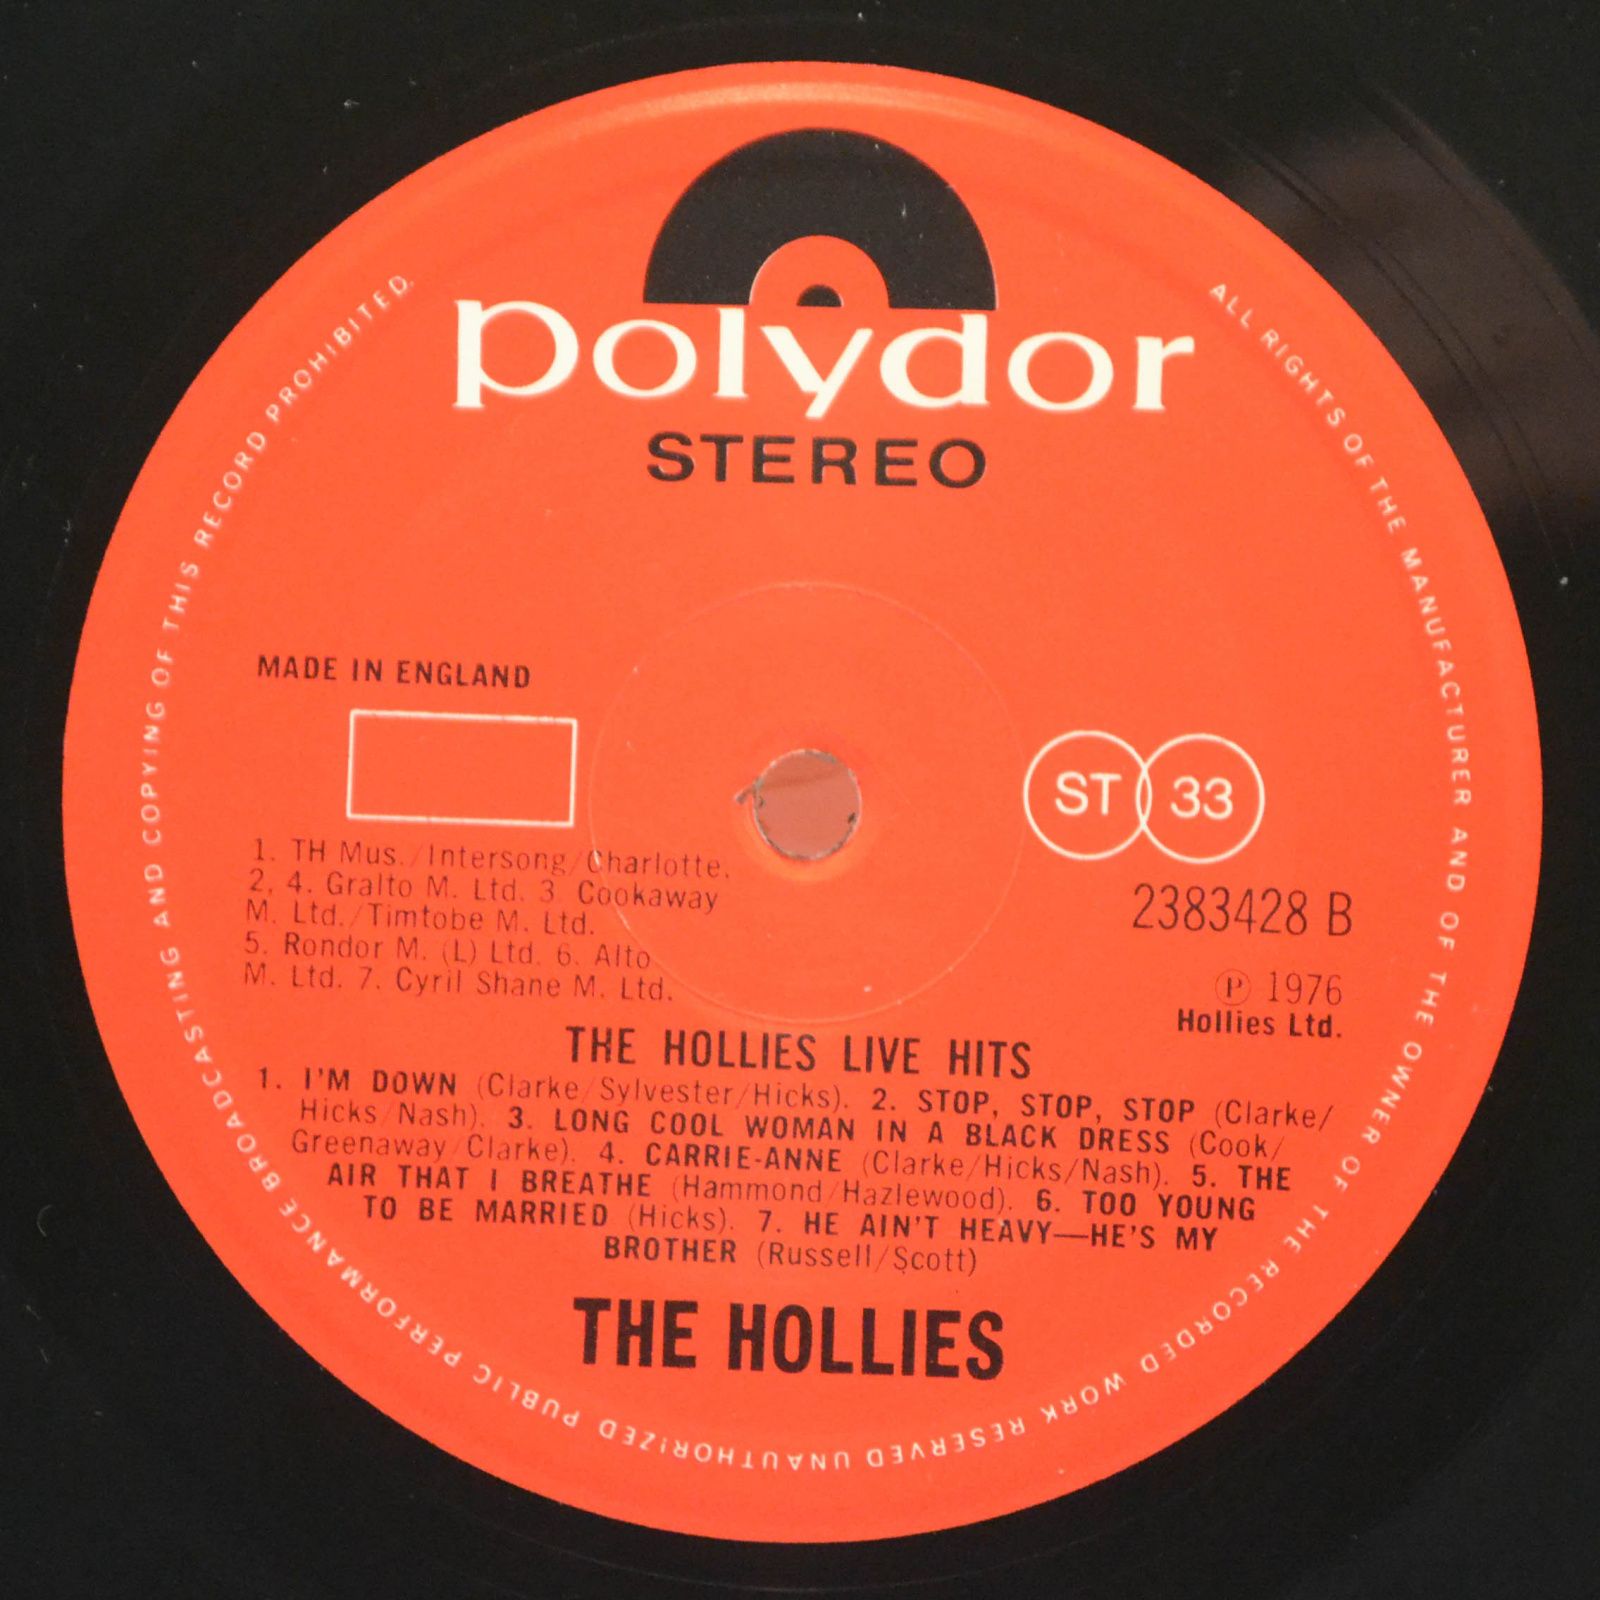 Hollies — Hollies Live Hits (UK), 1976